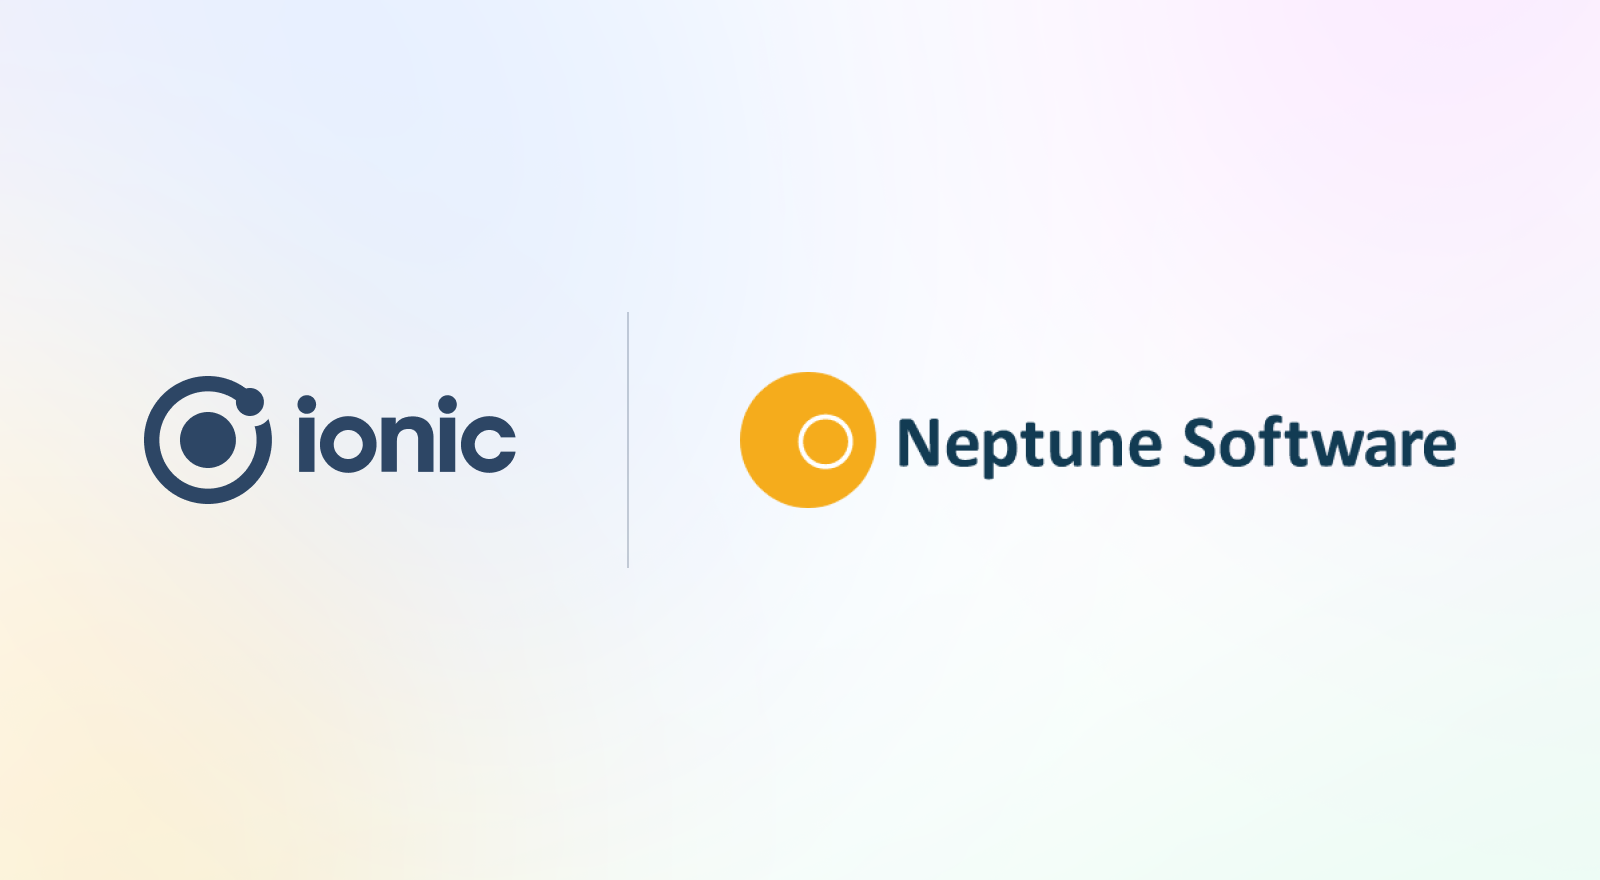 Ionic x Neptune Software